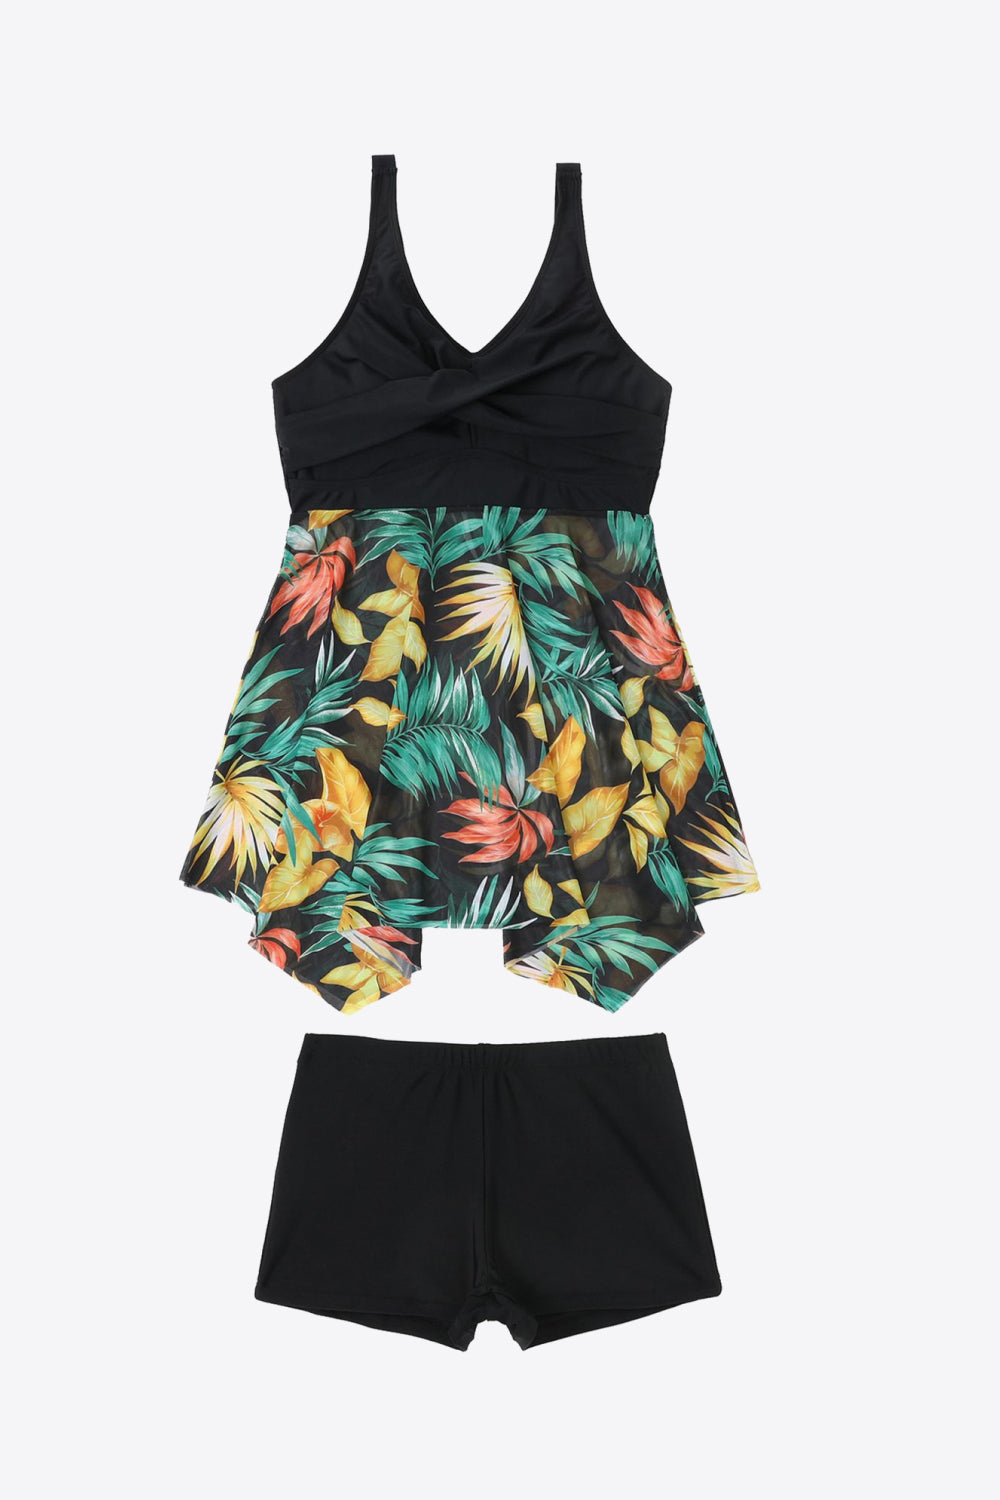 Women's Plus Size Floral Two-Tone Asymmetrical Hem Two-Piece Swimsuit